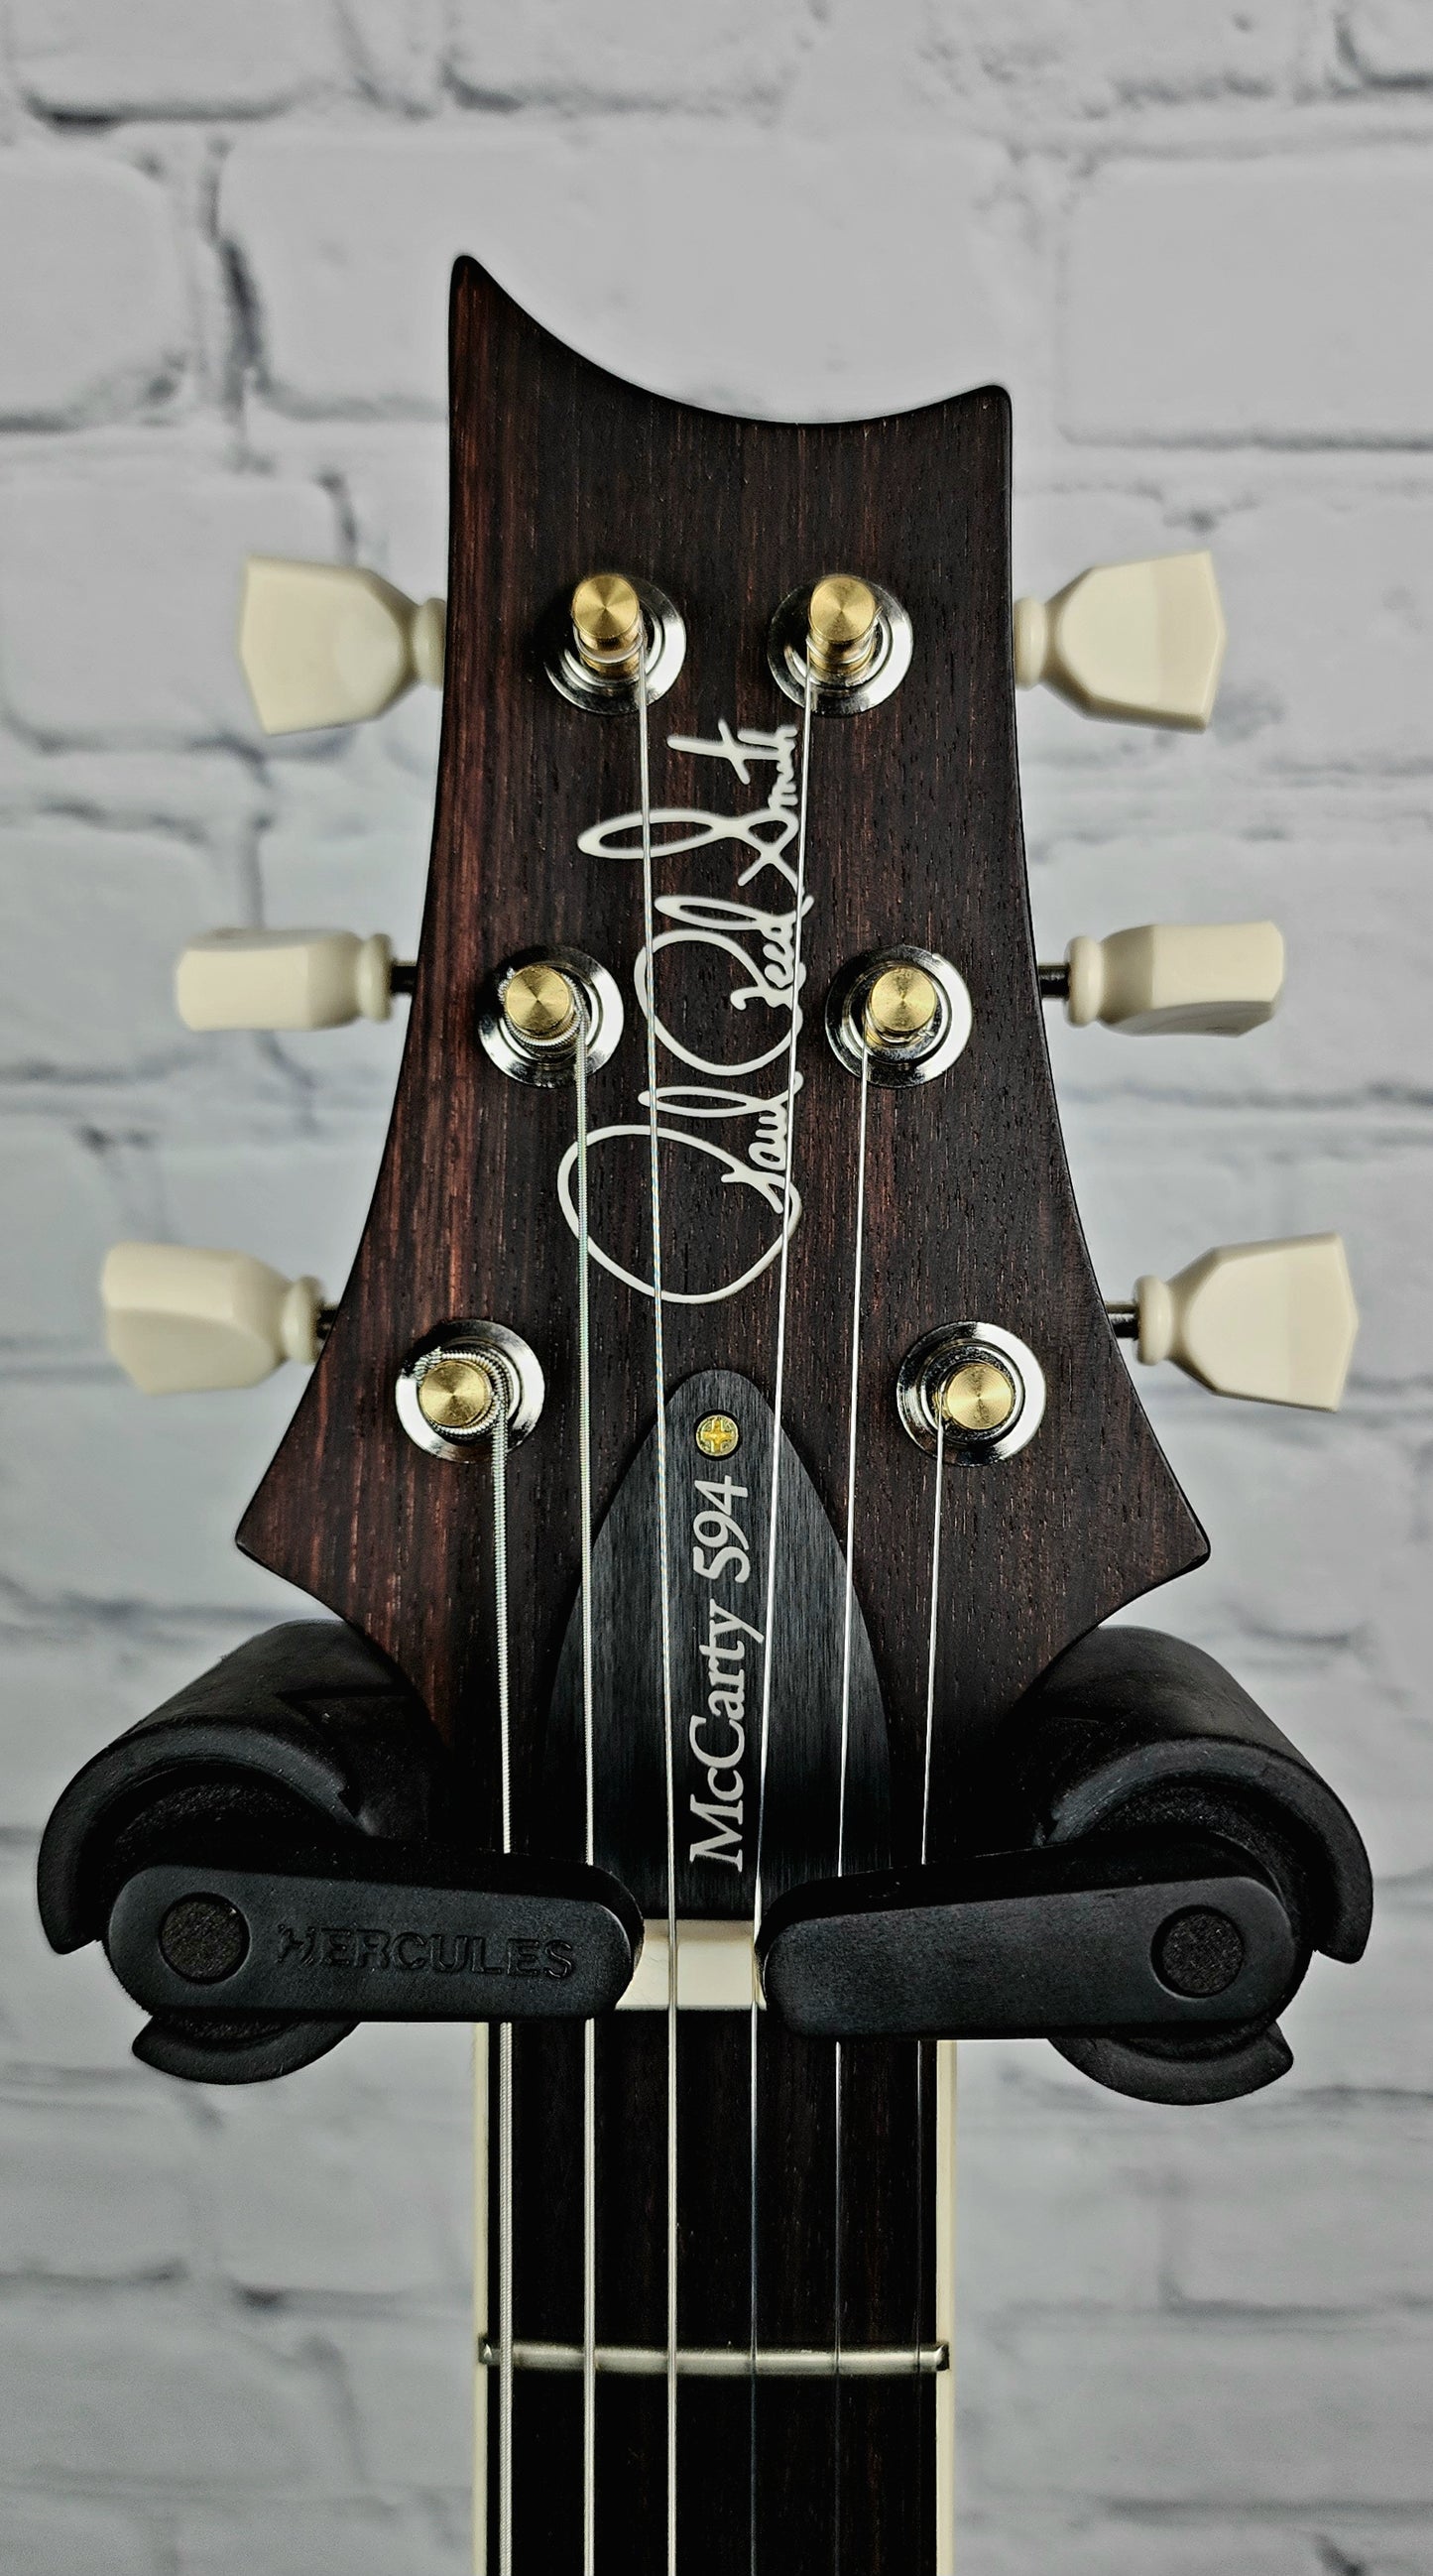 Paul Reed Smith PRS McCarty 594 Singlecut Electric Guitar 10 Top Charcoal Burst